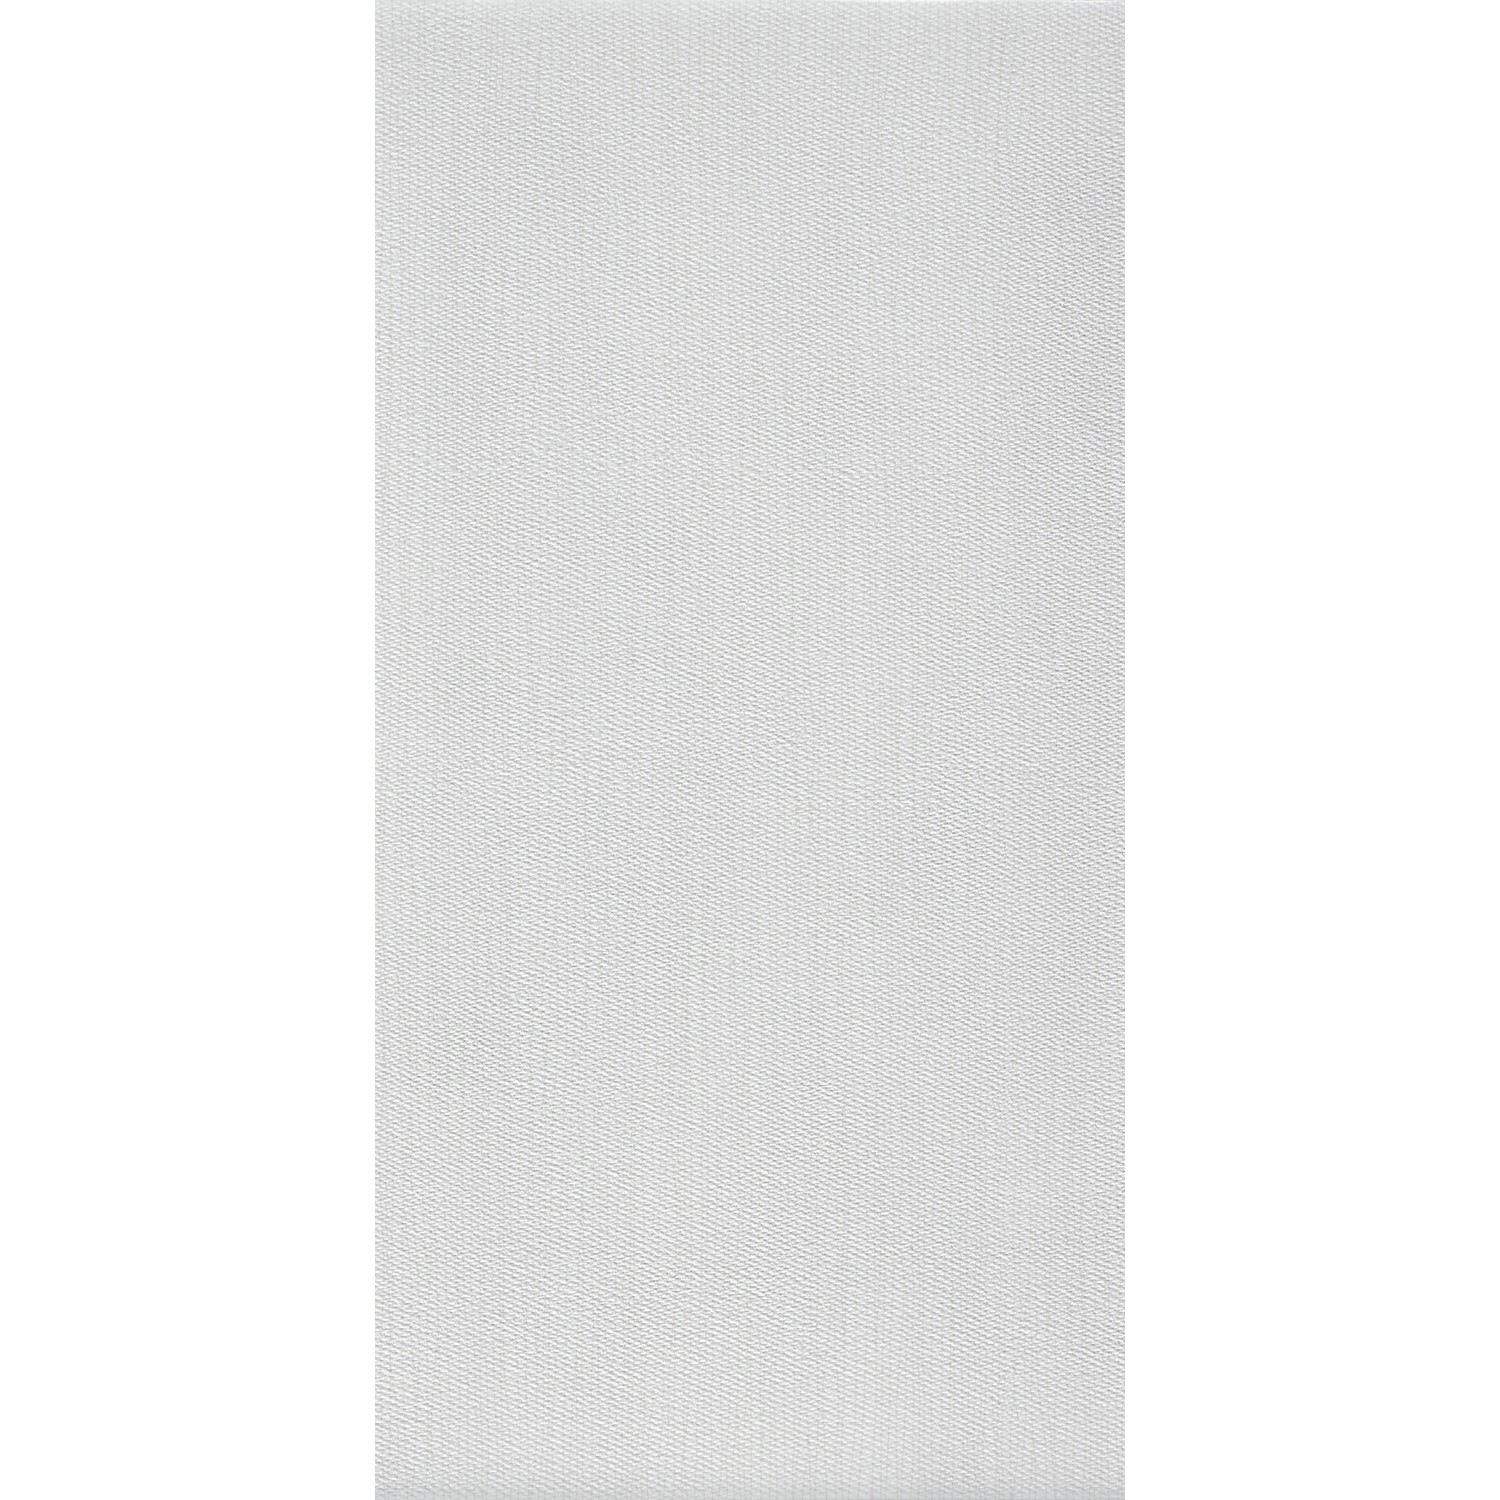 White Linen Effect Wall Tile 30 x 60cm - Modello